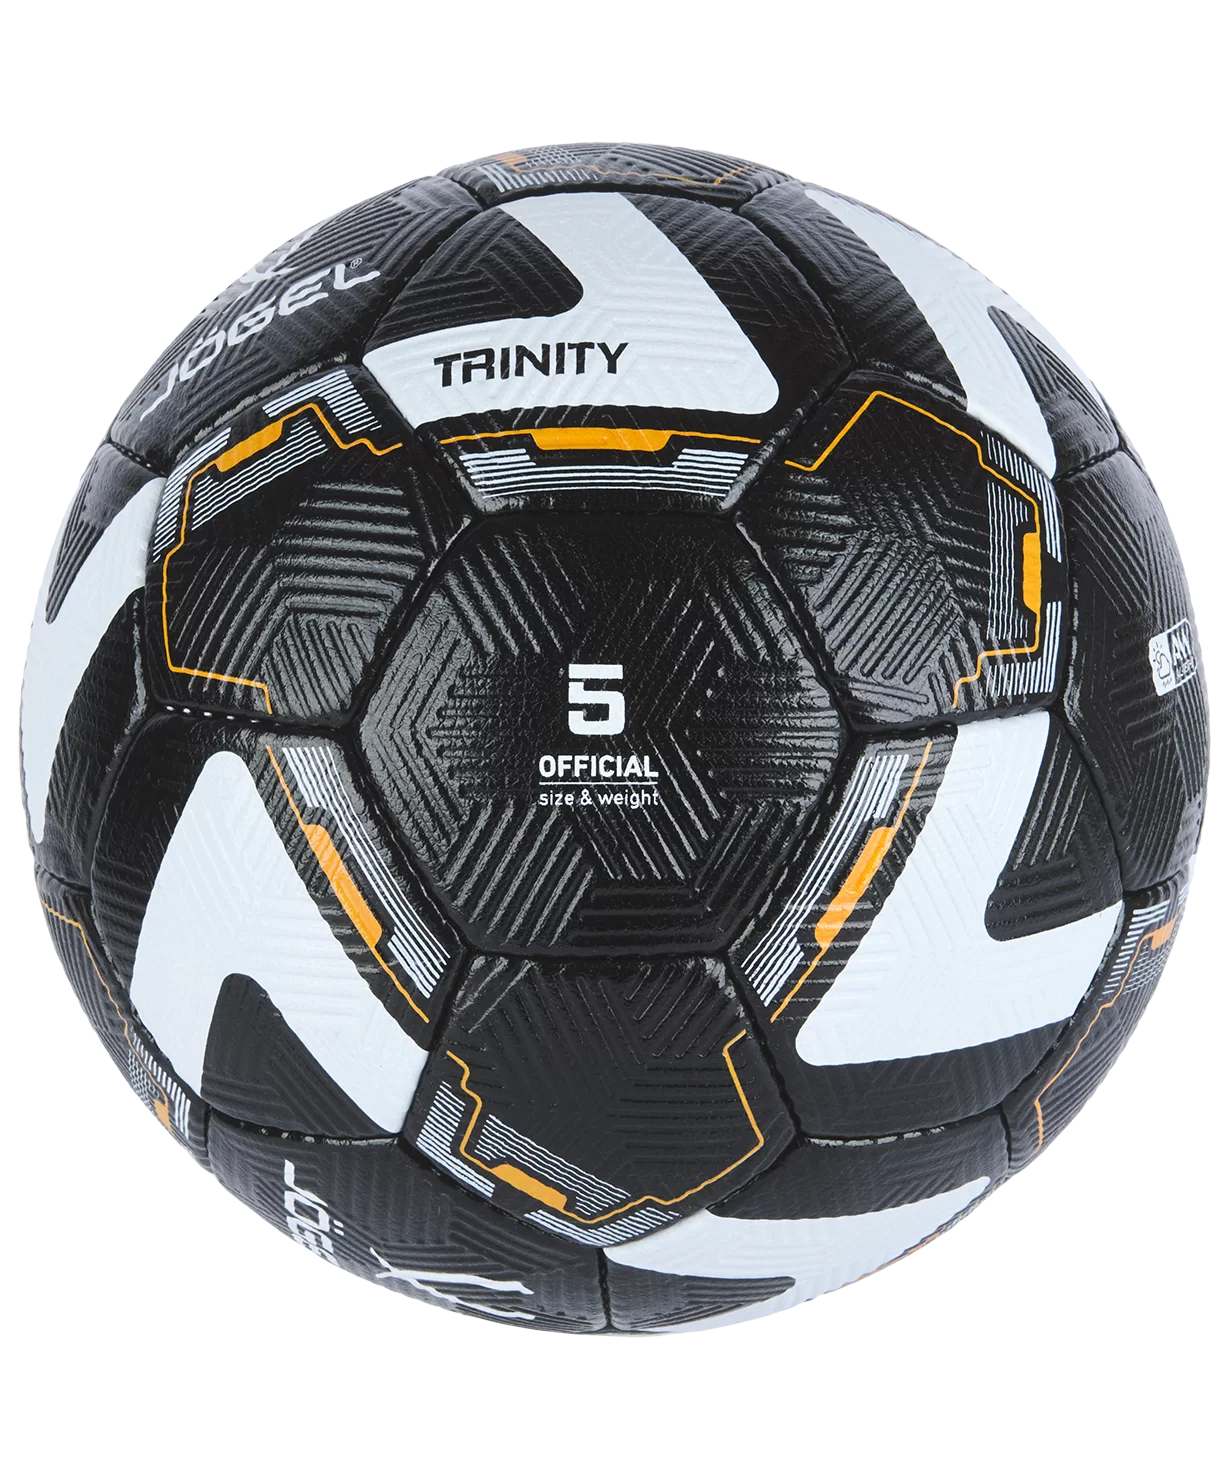 Фото Мяч футбольный Jögel Trinity №5 (BC20)  УТ-00017604 со склада магазина СпортСЕ